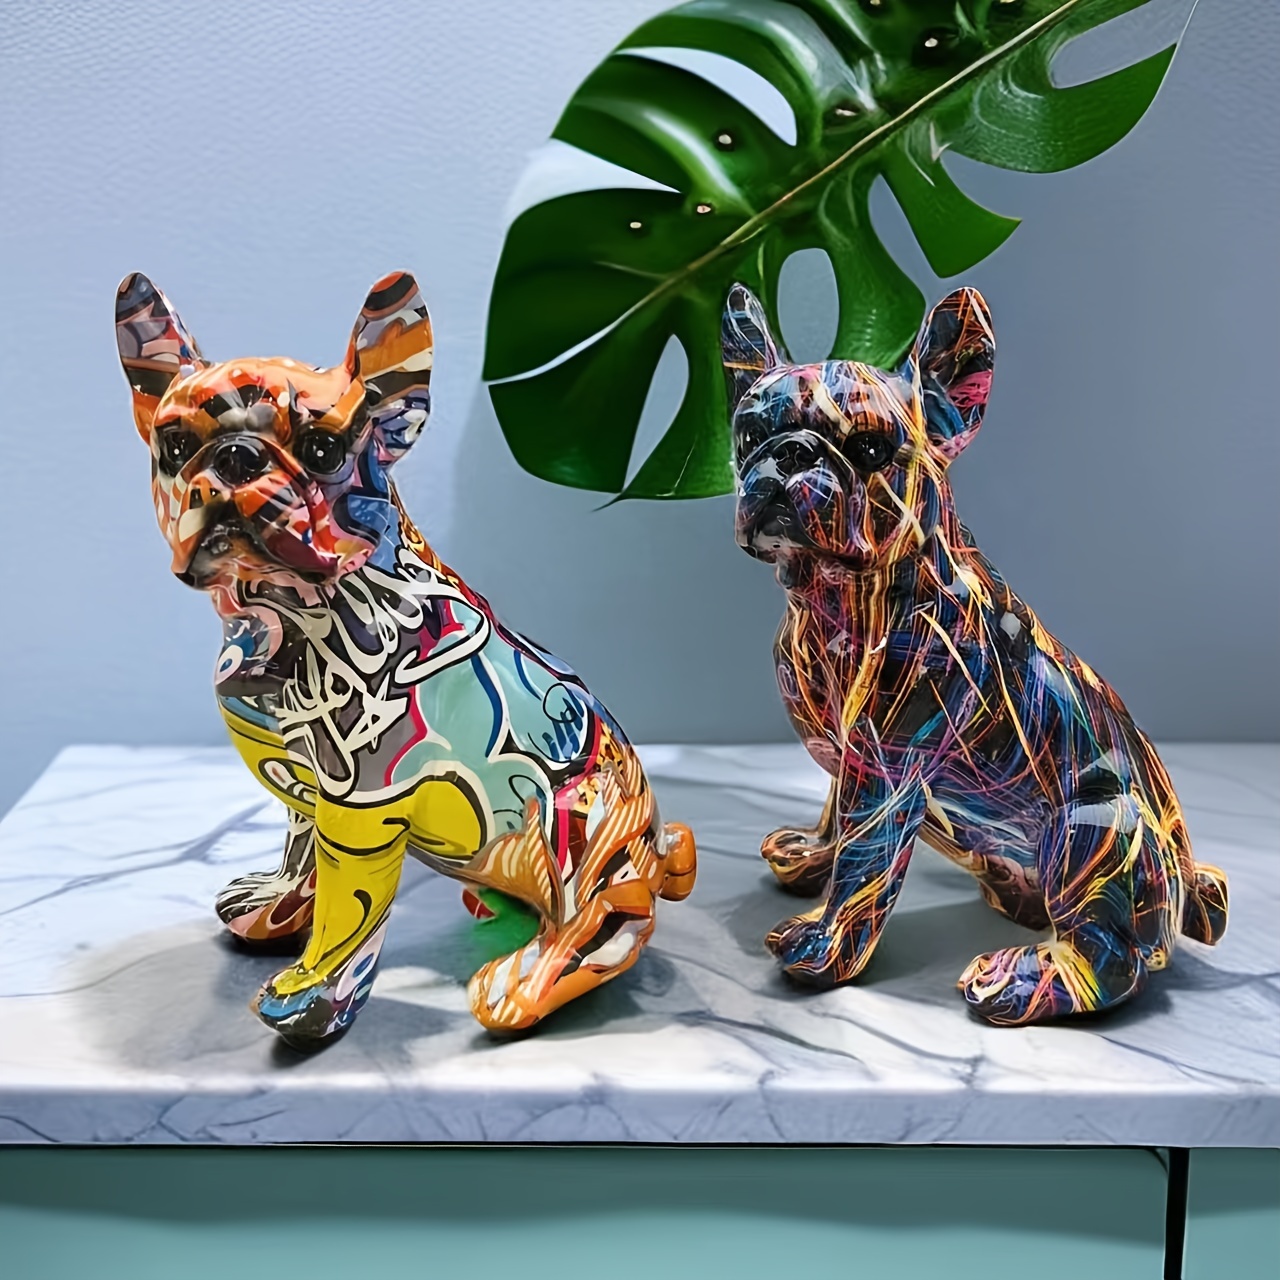 1pc 落書きチワワ犬の彫刻、クリエイティブなカラフルな樹脂座っている犬の像彫刻家の装飾、モダンなグッズ像、アート犬の工芸品、リビングルームの装飾